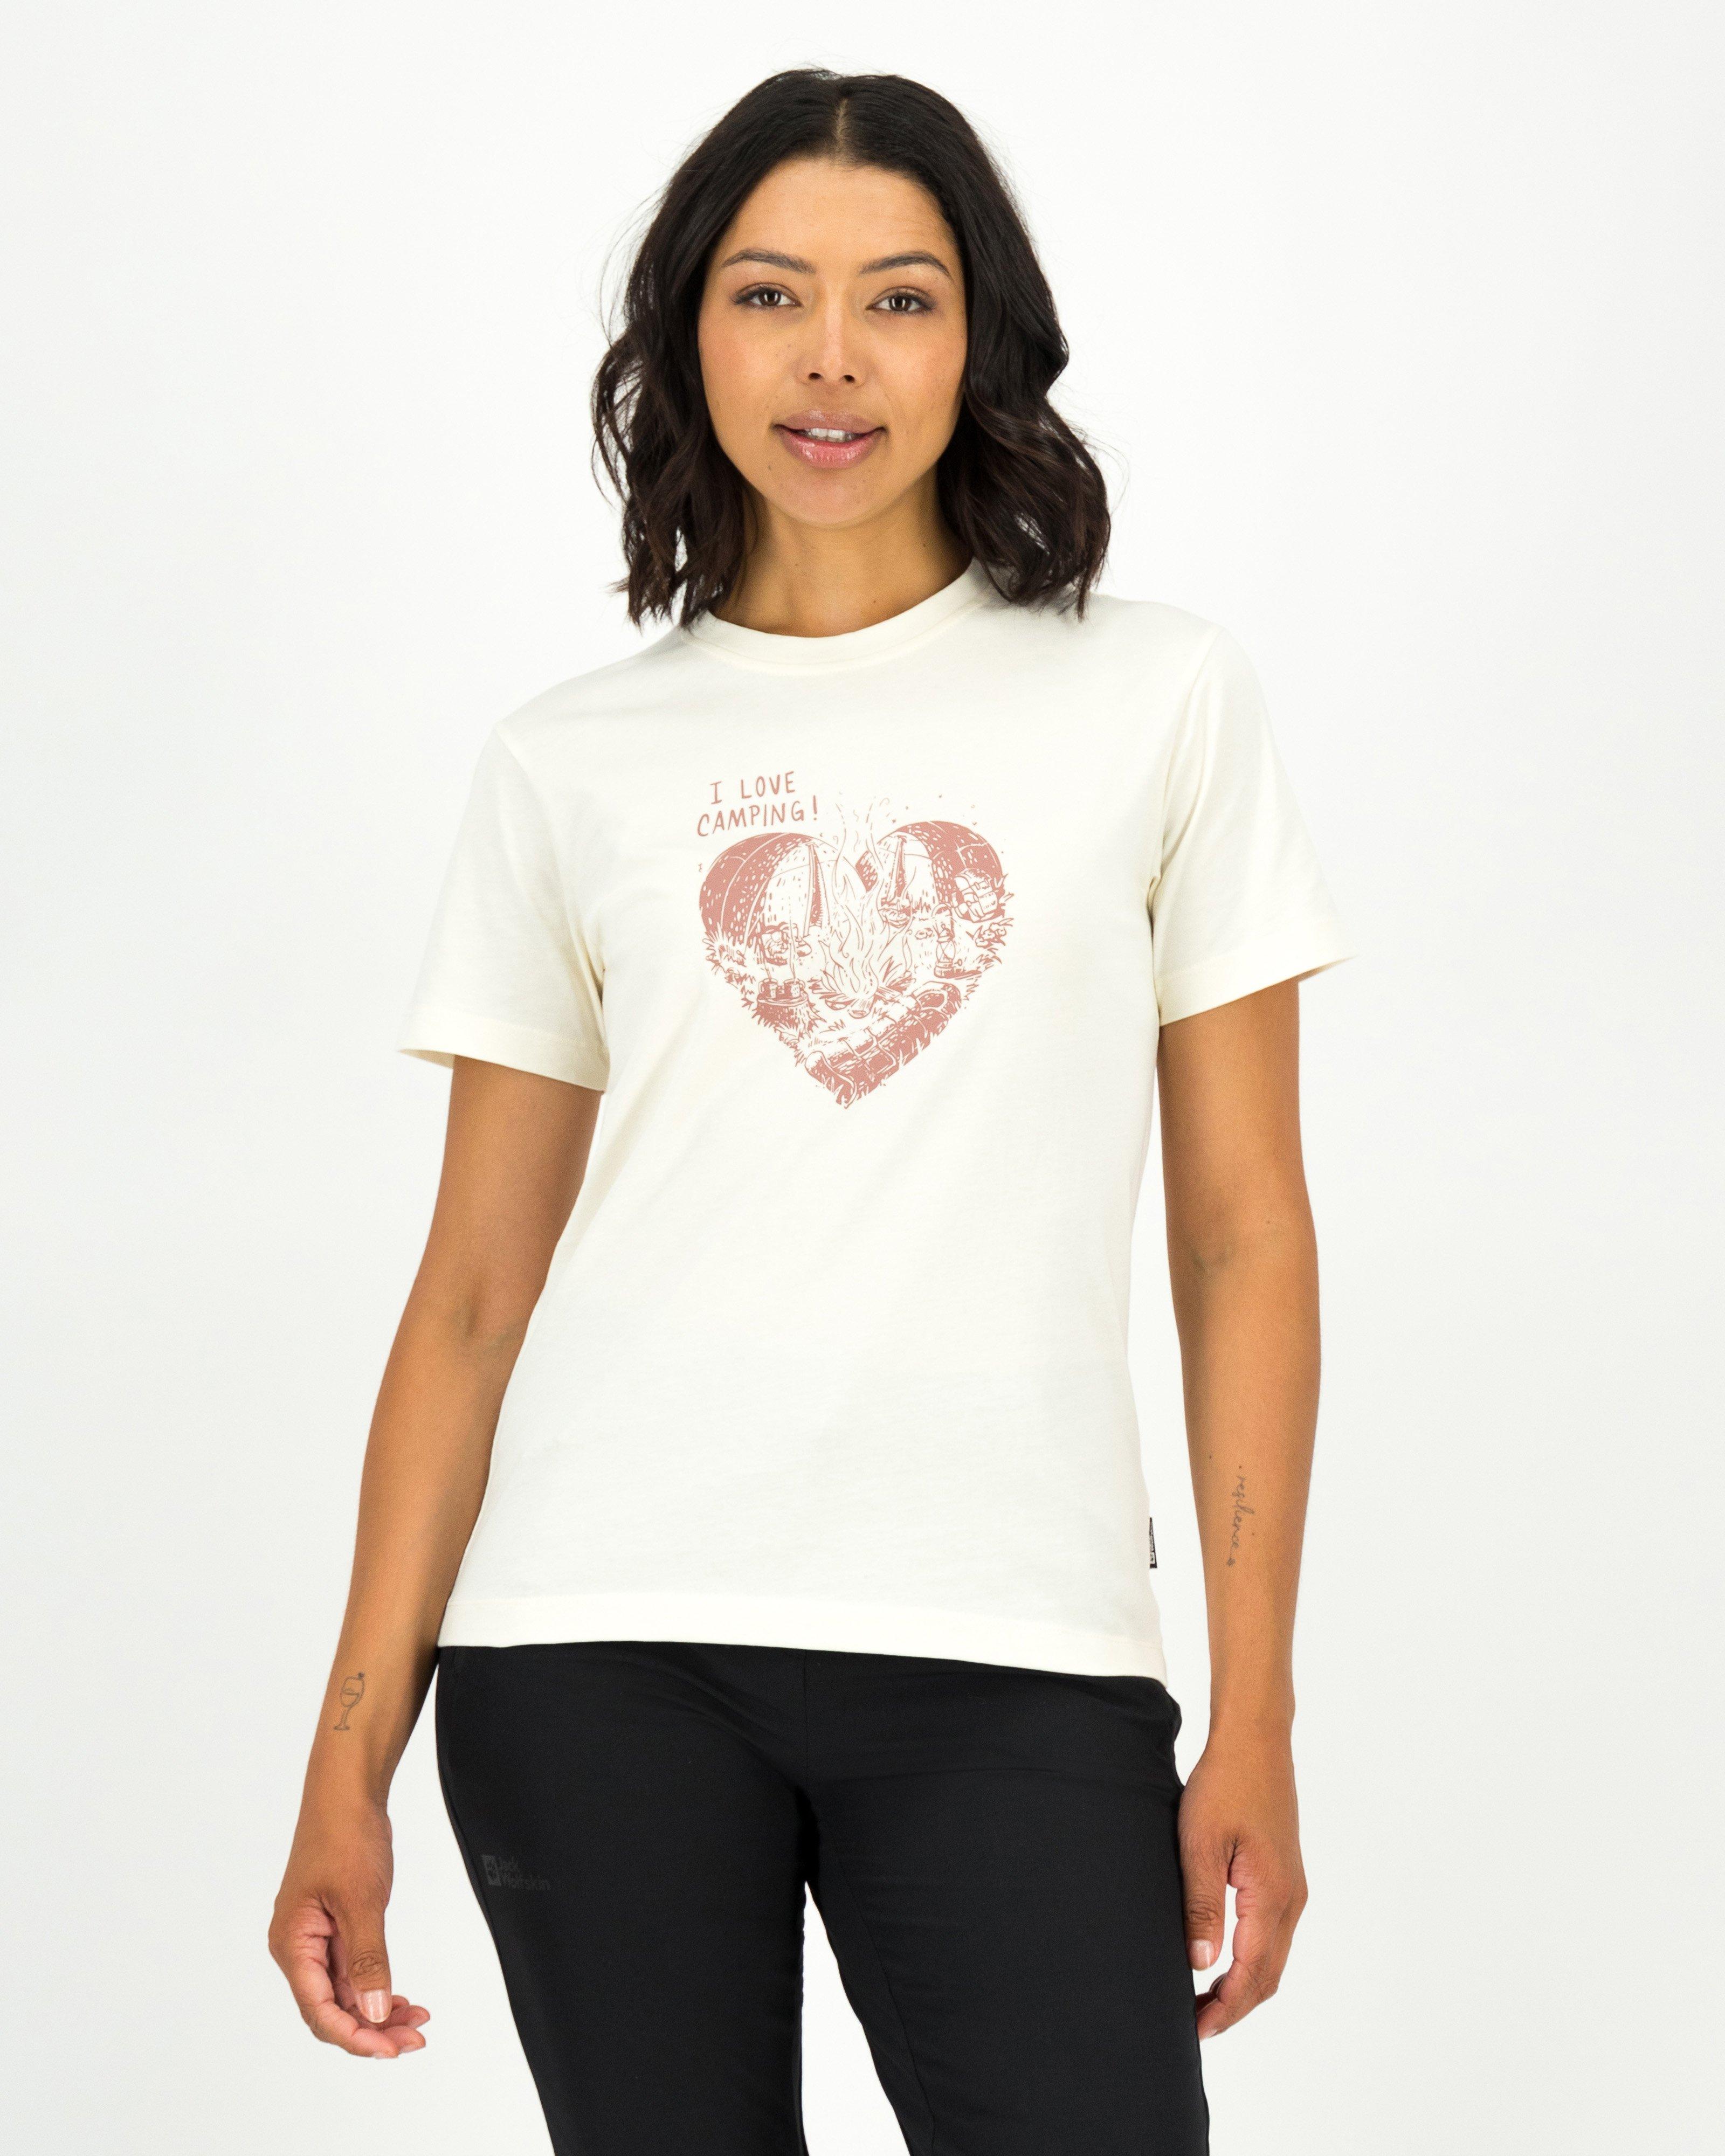 Jack Wolfskin Women’s Camping Love Slim Fit Cotton T-shirt -  White